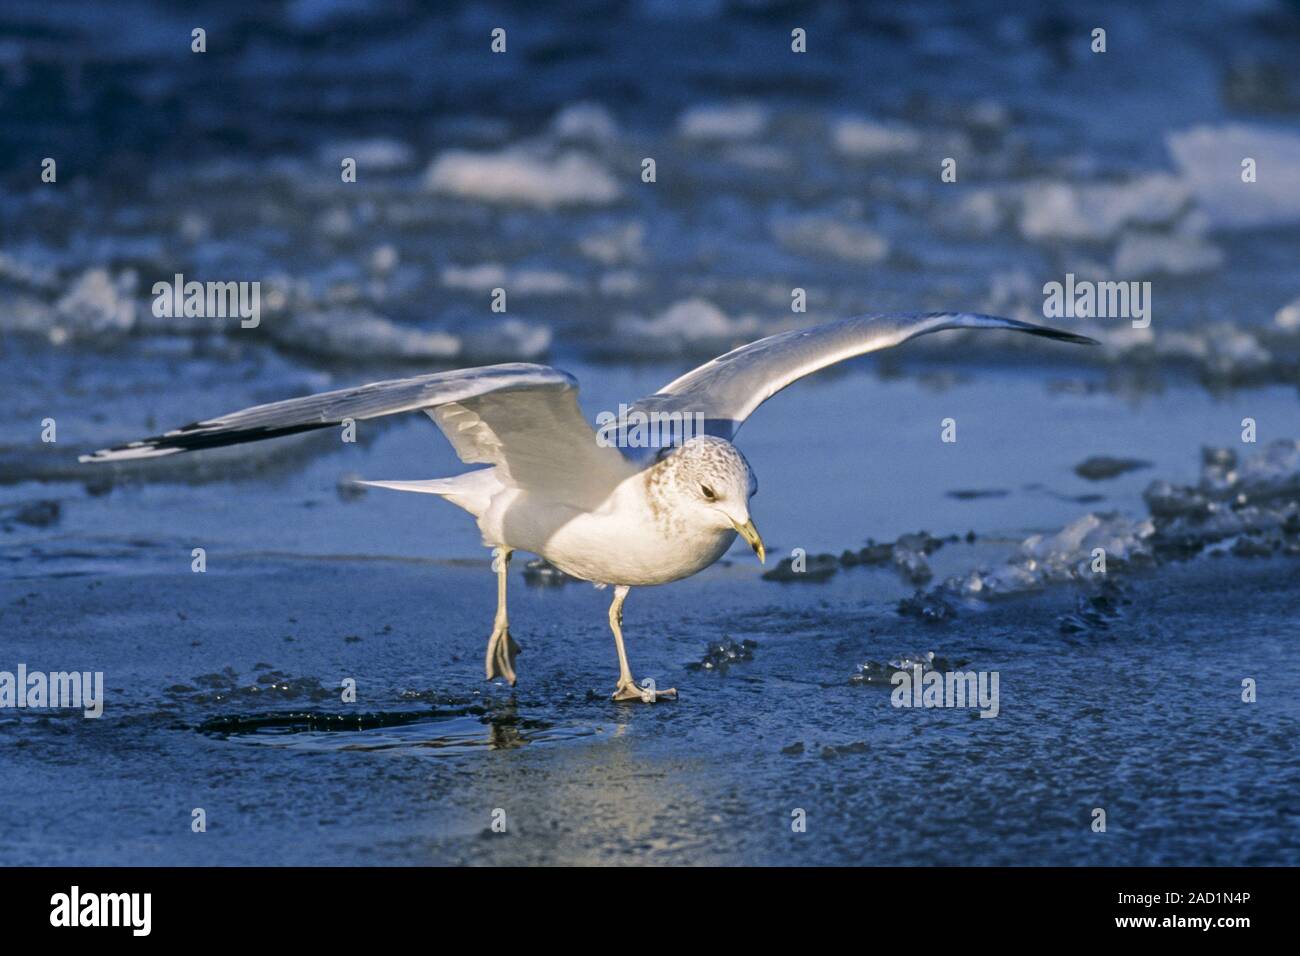 Gaviota común de castas normalmente cerca del agua - (Mew Gull - Foto pájaro adulto en Plumaje de invierno) Foto de stock